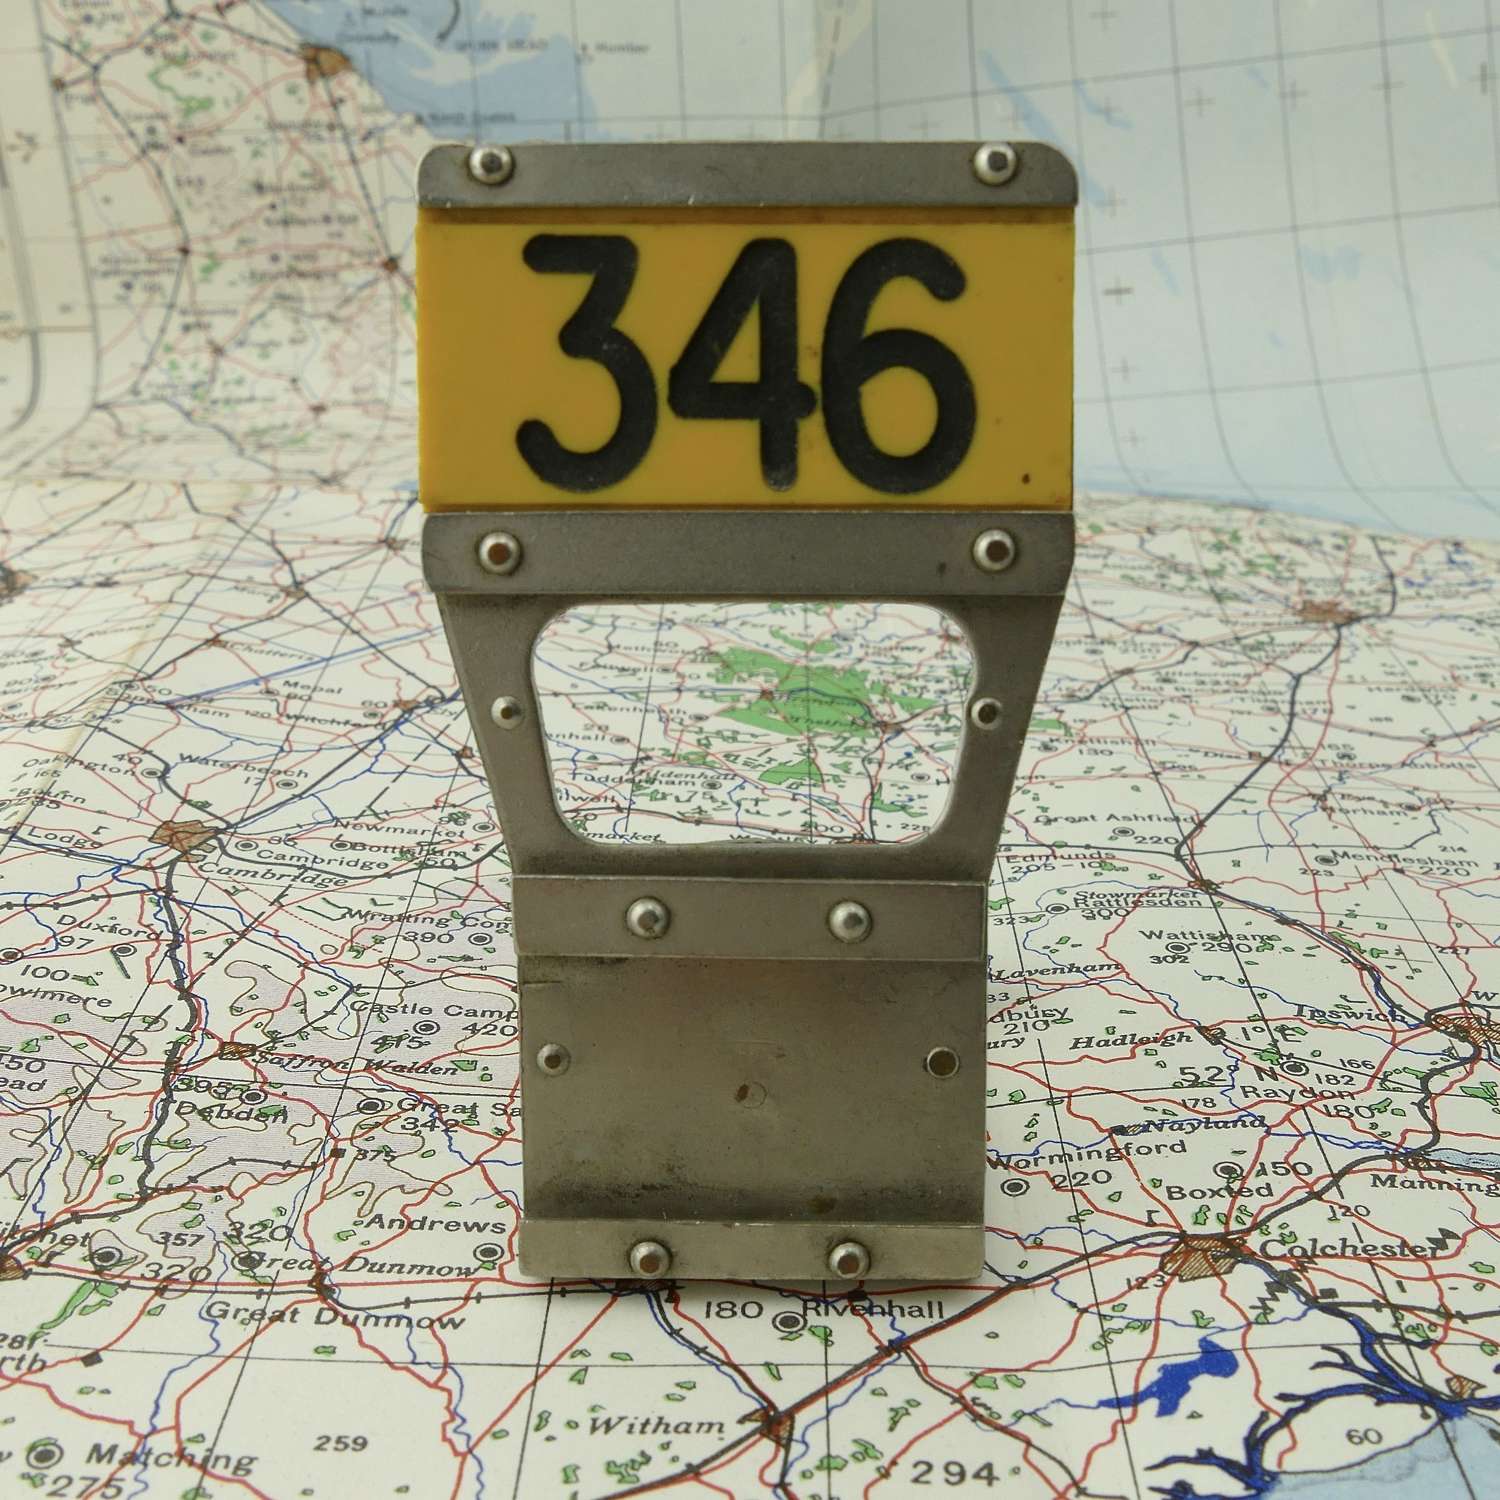 RAF operations room raid designation plaque - 346